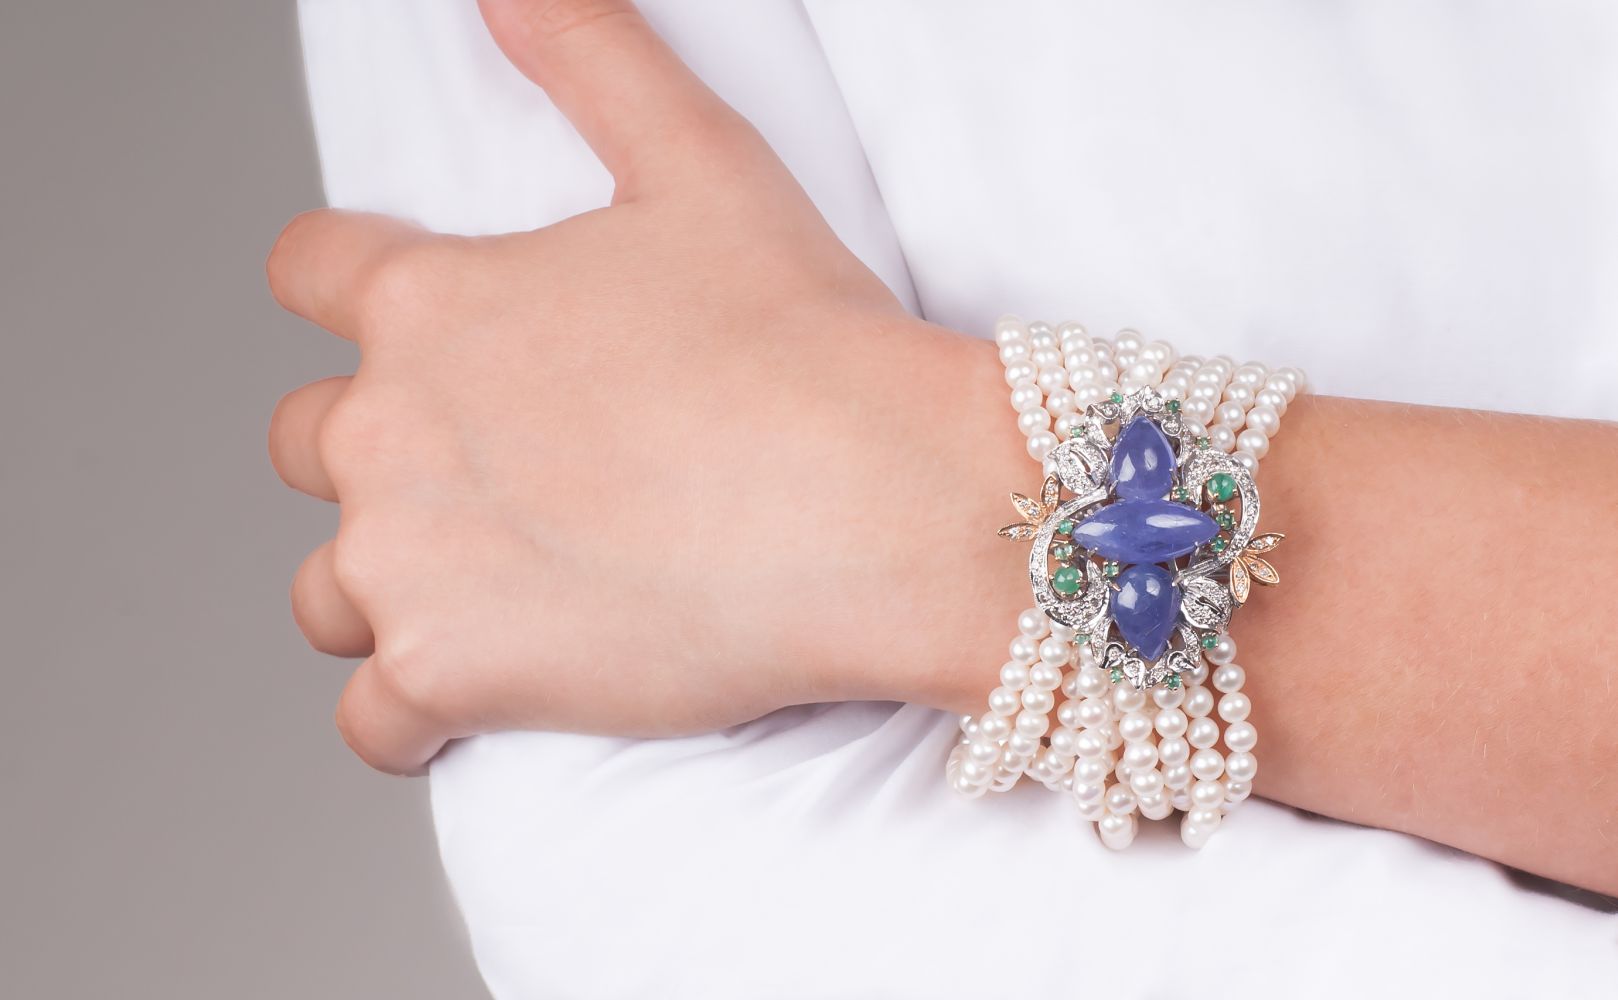 A Pearl Bracelet with splendid Precious Stones Setting - image 2